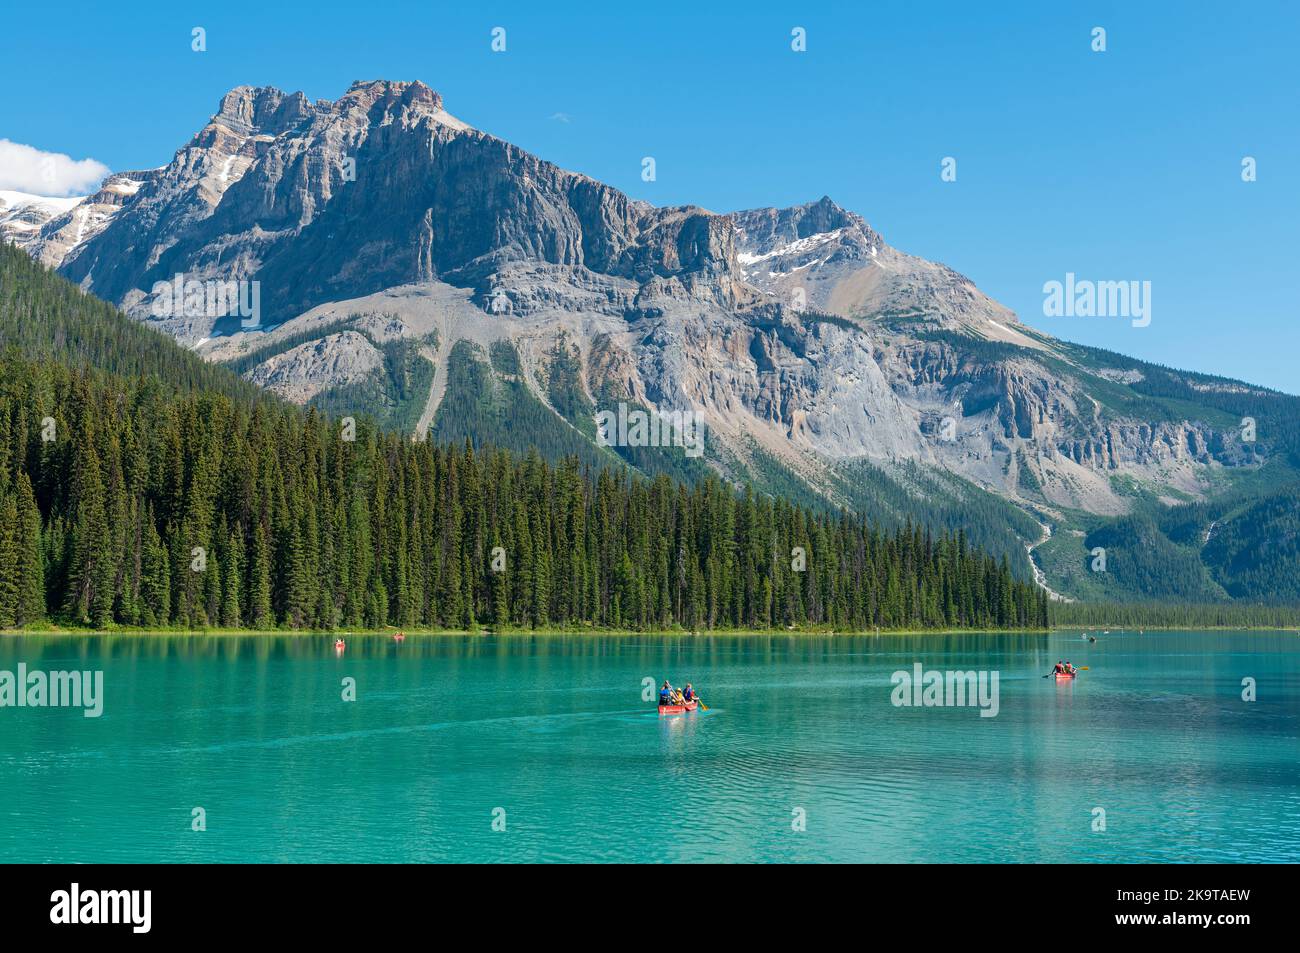 Emerald lake with people doing kayak, Yoho national park, British Columbia, Canada. Stock Photo